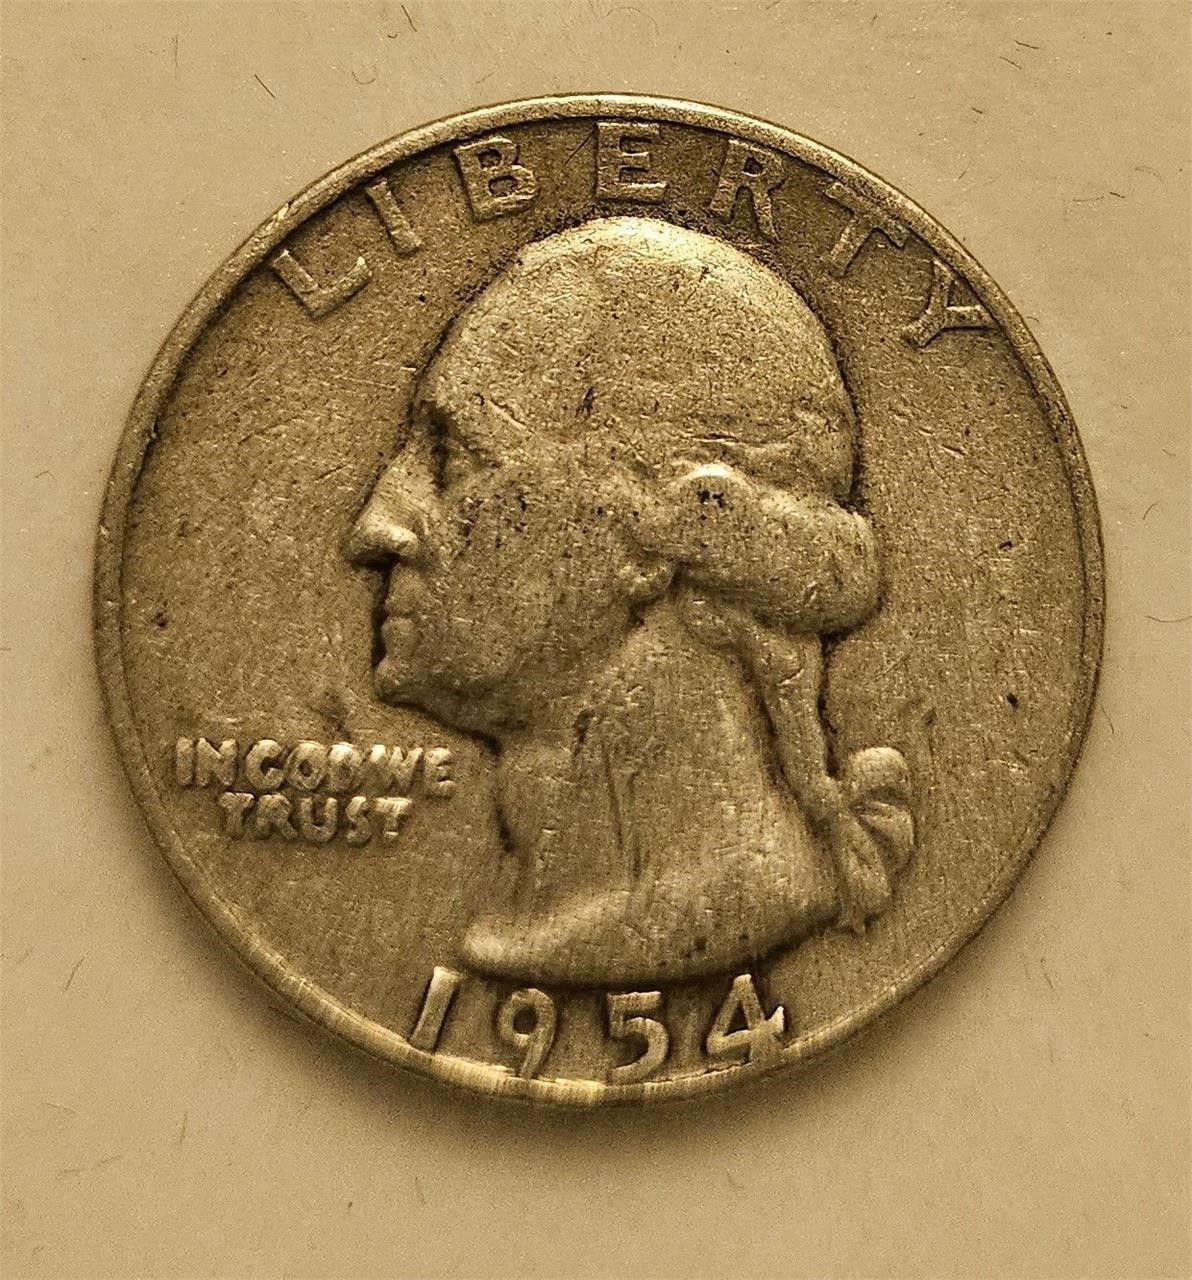 1954 D Silver Quarter